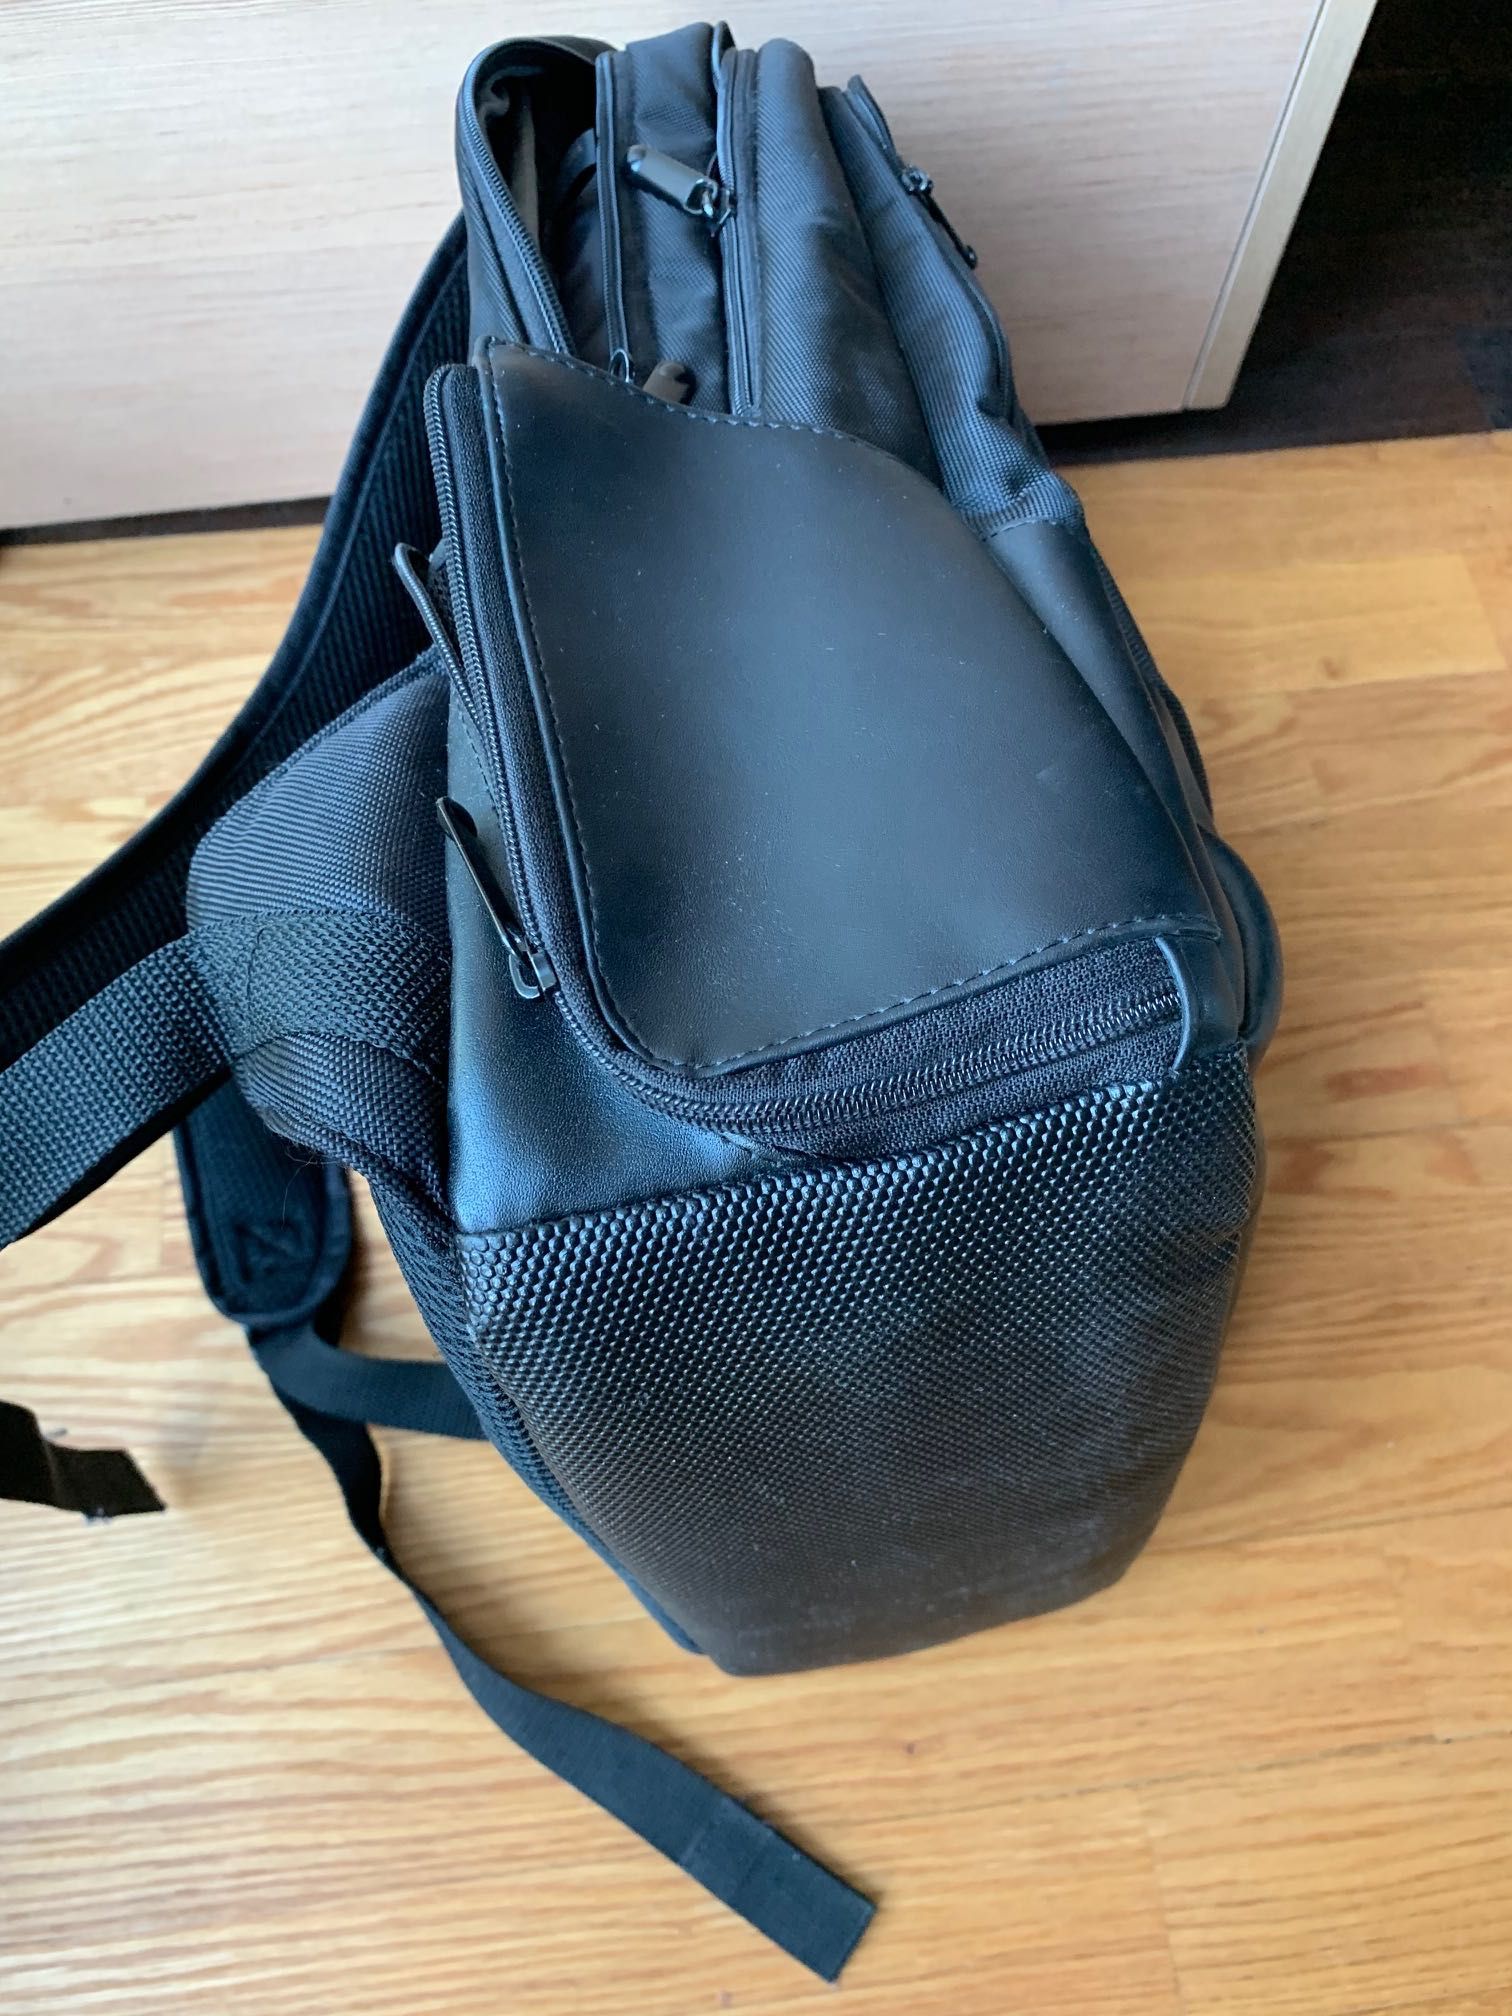 Plecak LENOVO THINKPAD Professional Backpack plecak do szkoły laptopa